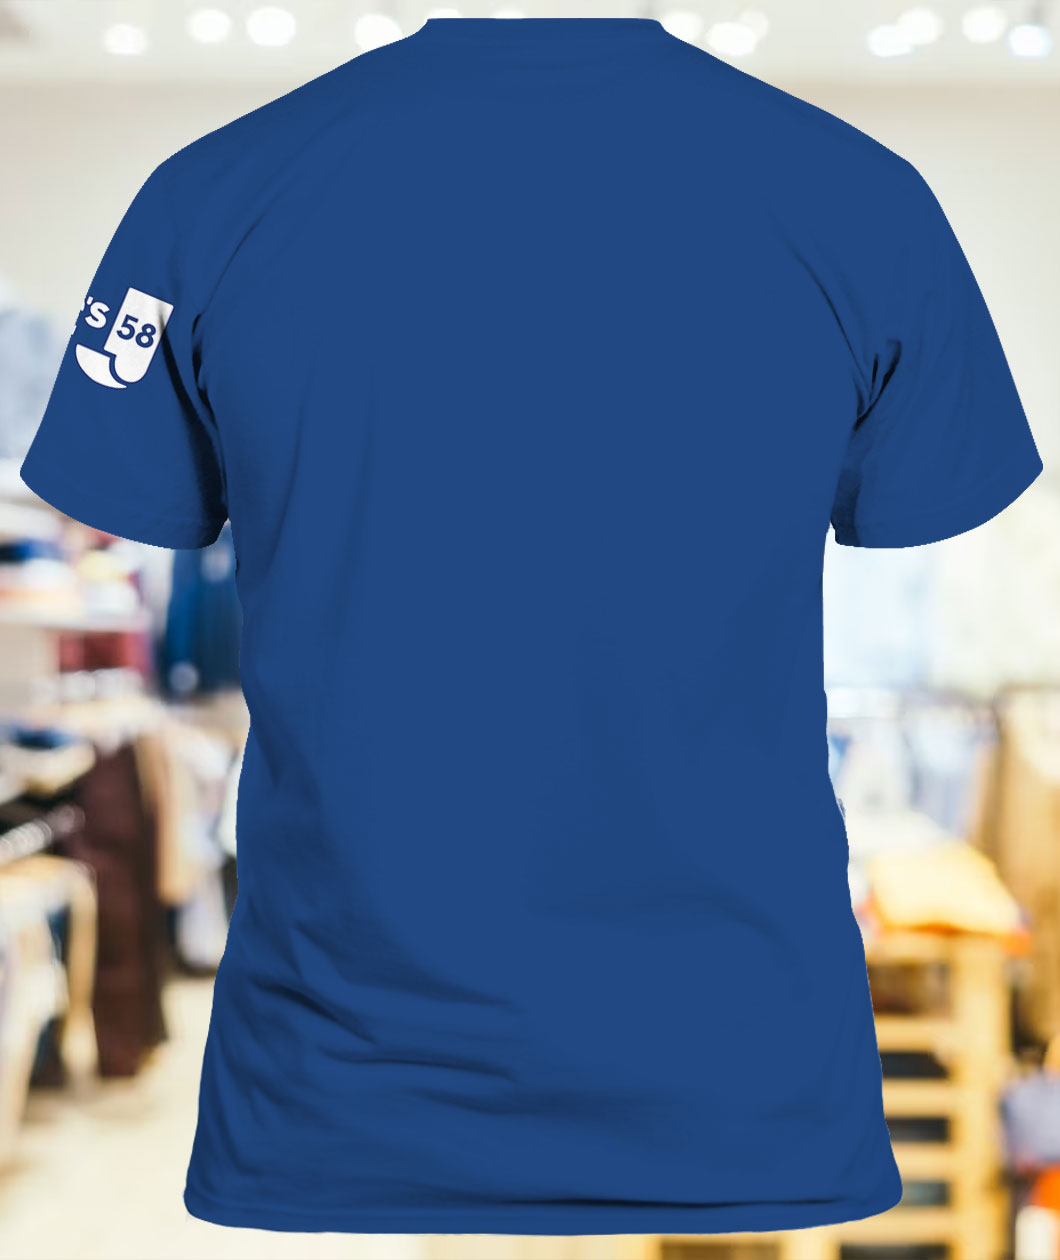 2023 New York Mets Number 23 Mets Football Jersey Shirt Giveaways - Lelemoon